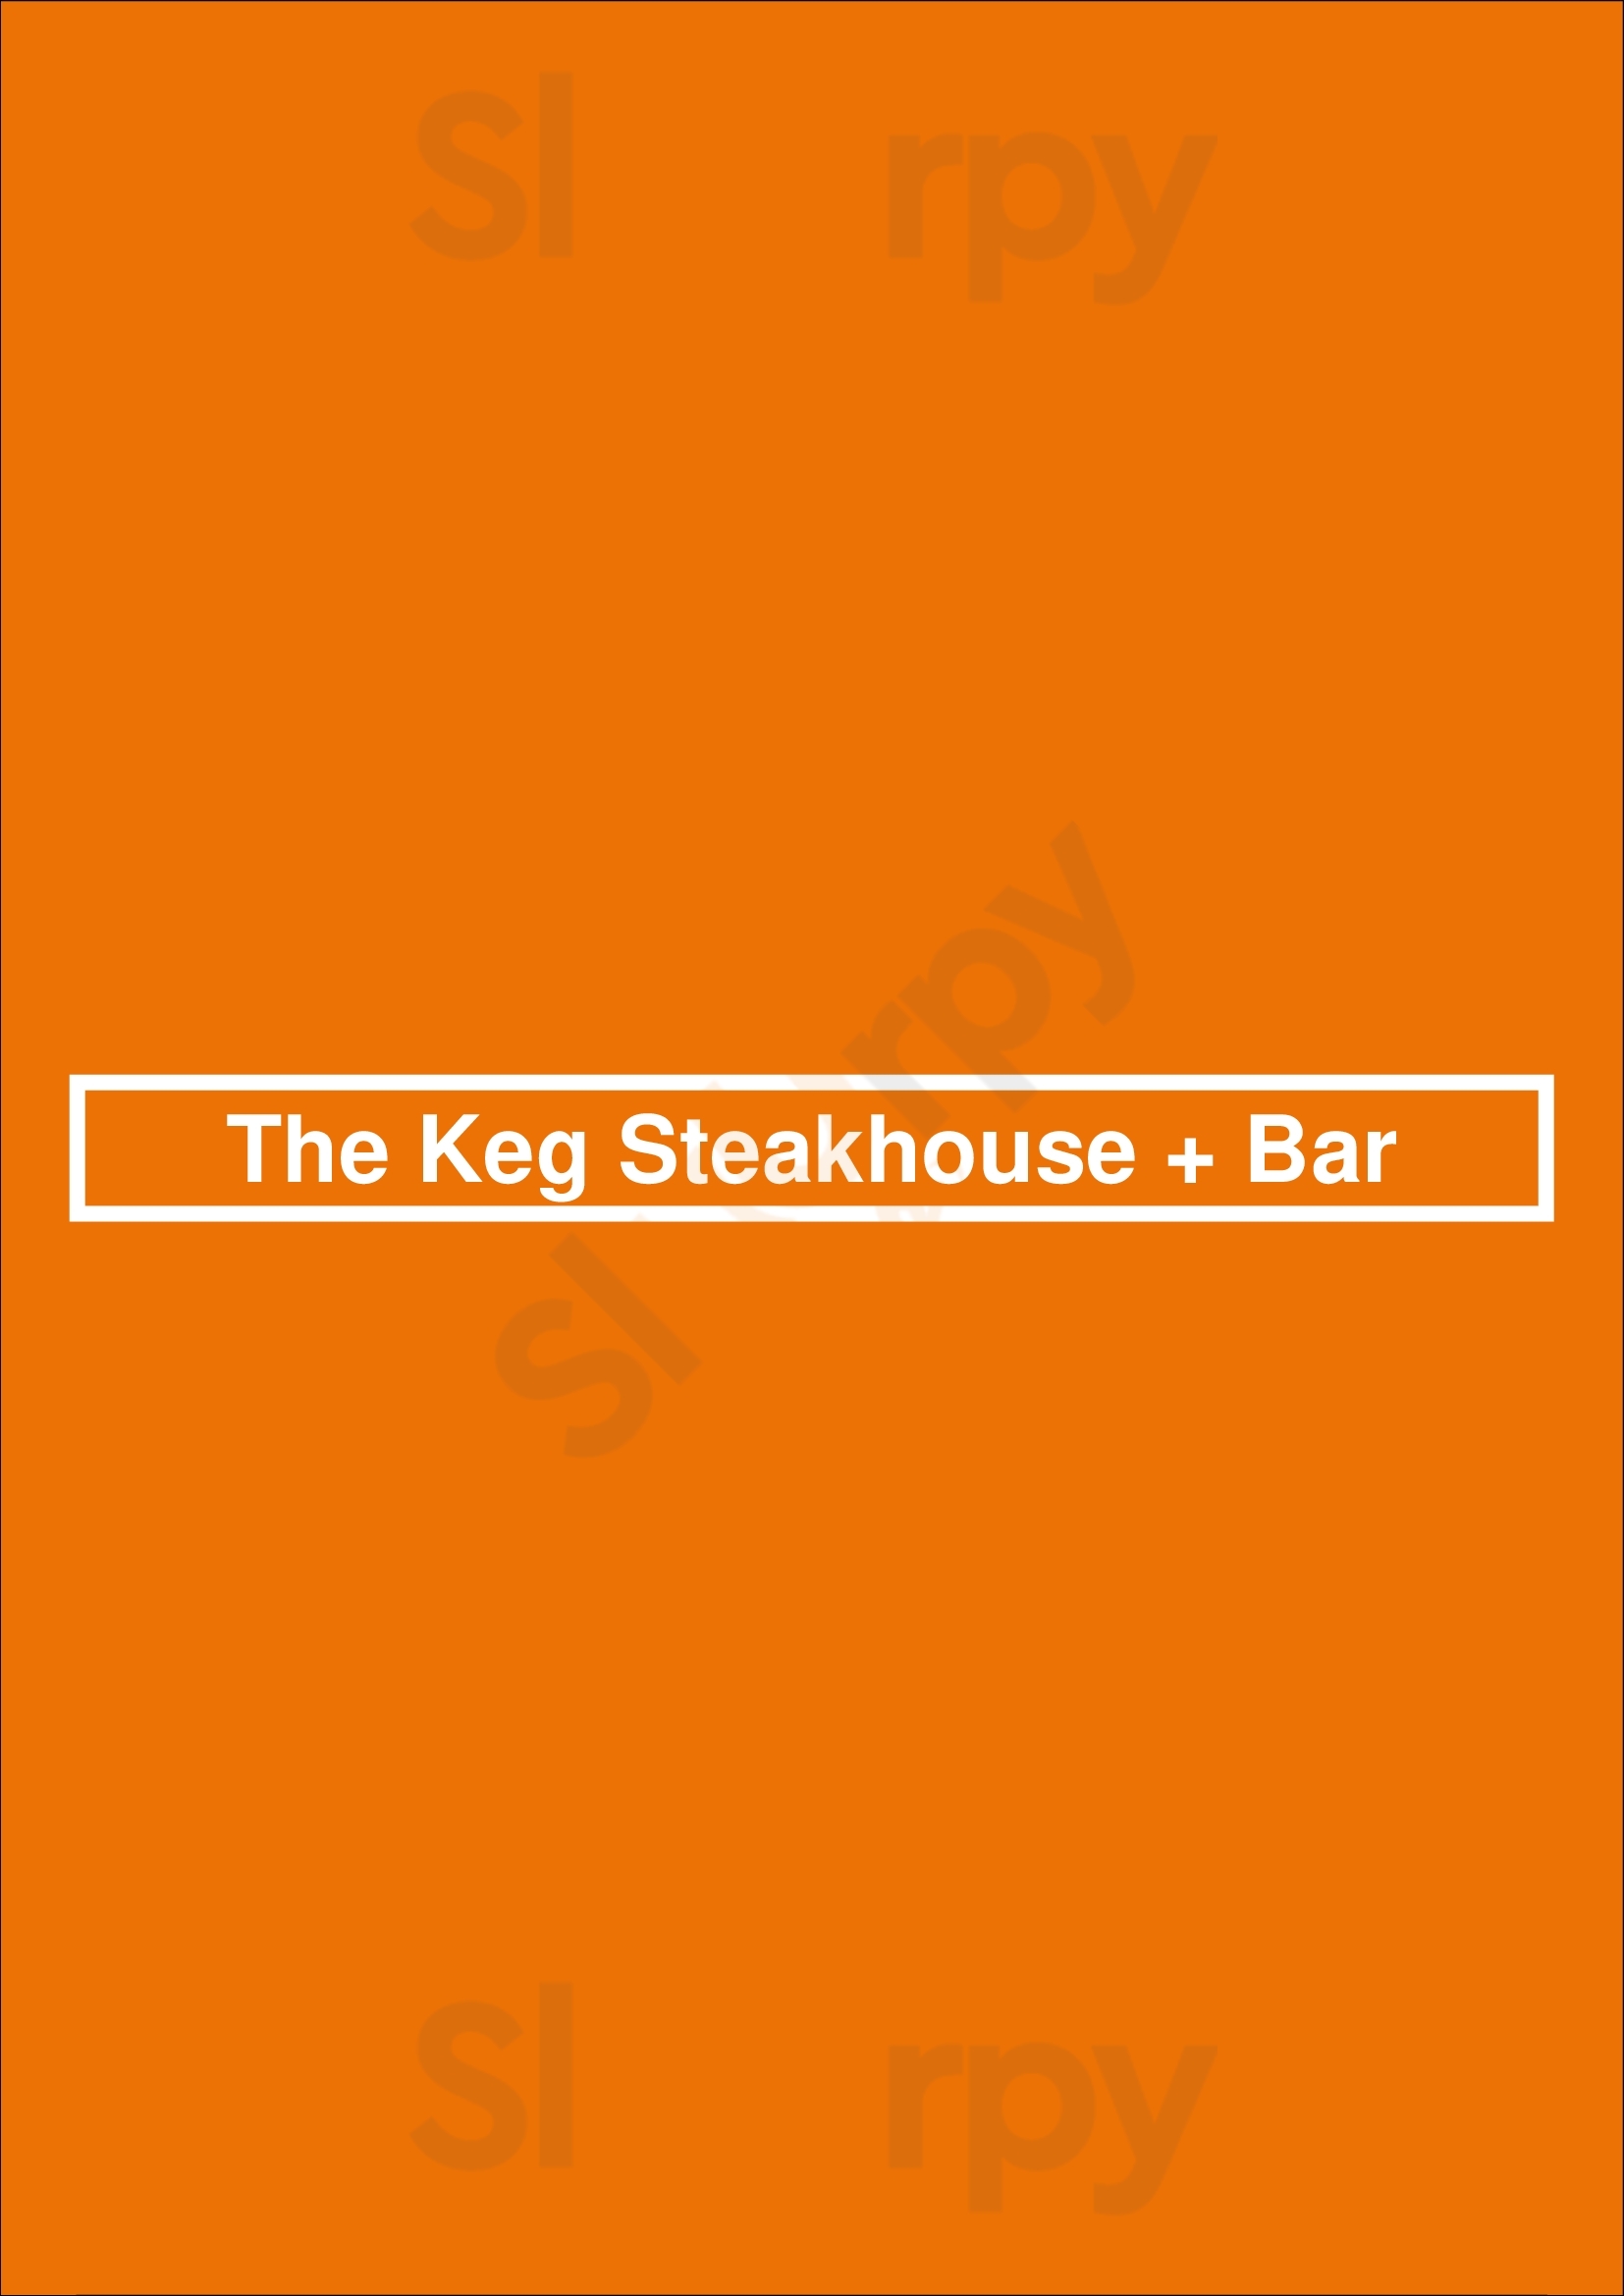 The Keg Steakhouse + Bar - Granville Island Vancouver Menu - 1